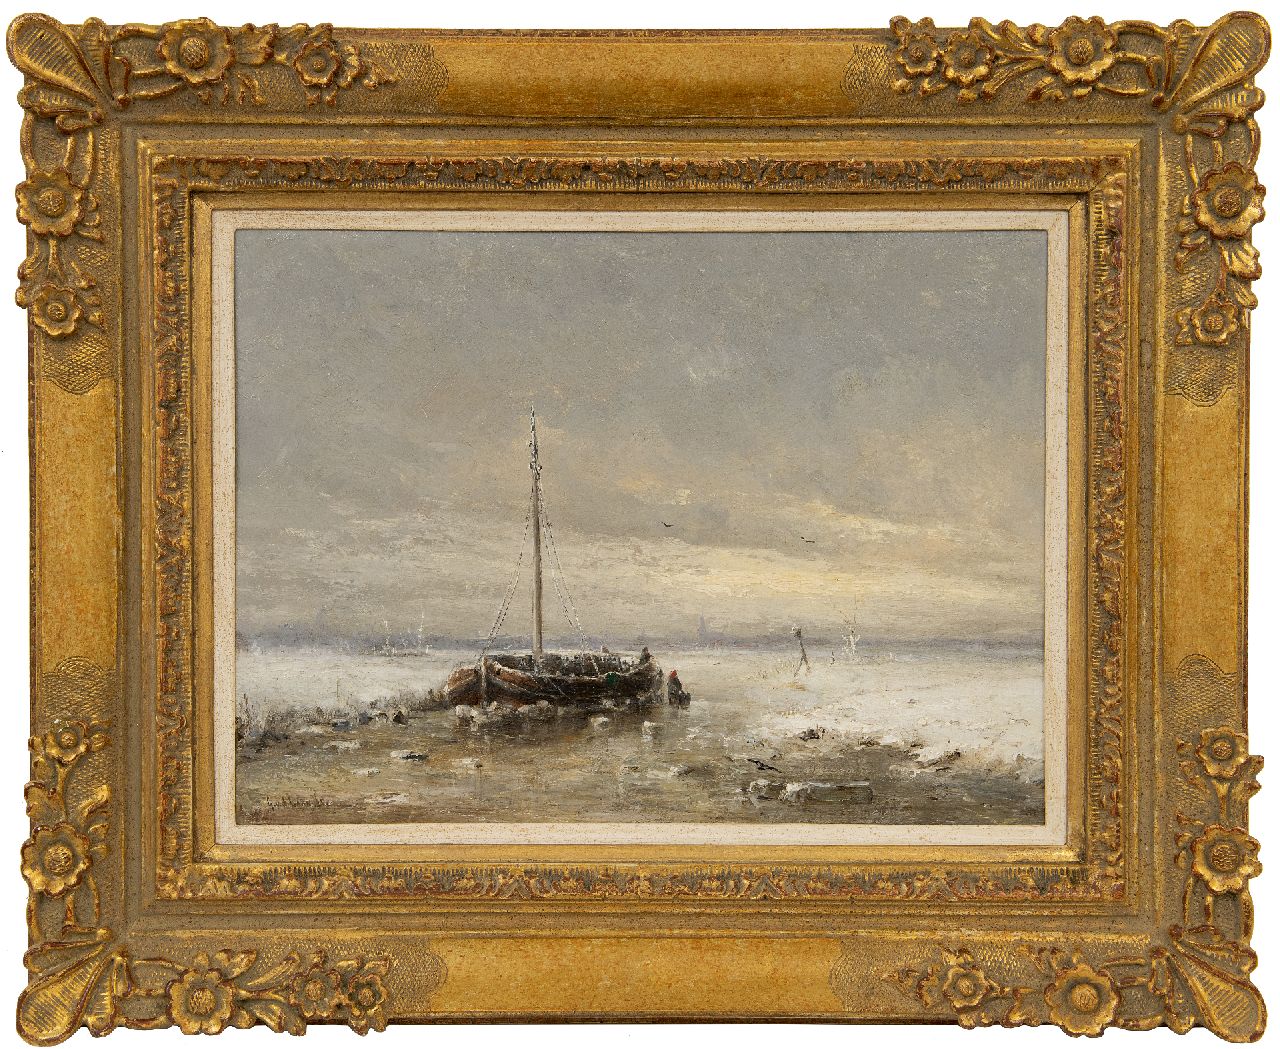 Laan G. van der | Gerard van der Laan | Paintings offered for sale | A frozen ship, oil on panel 31.1 x 42.5 cm, signed l.l.